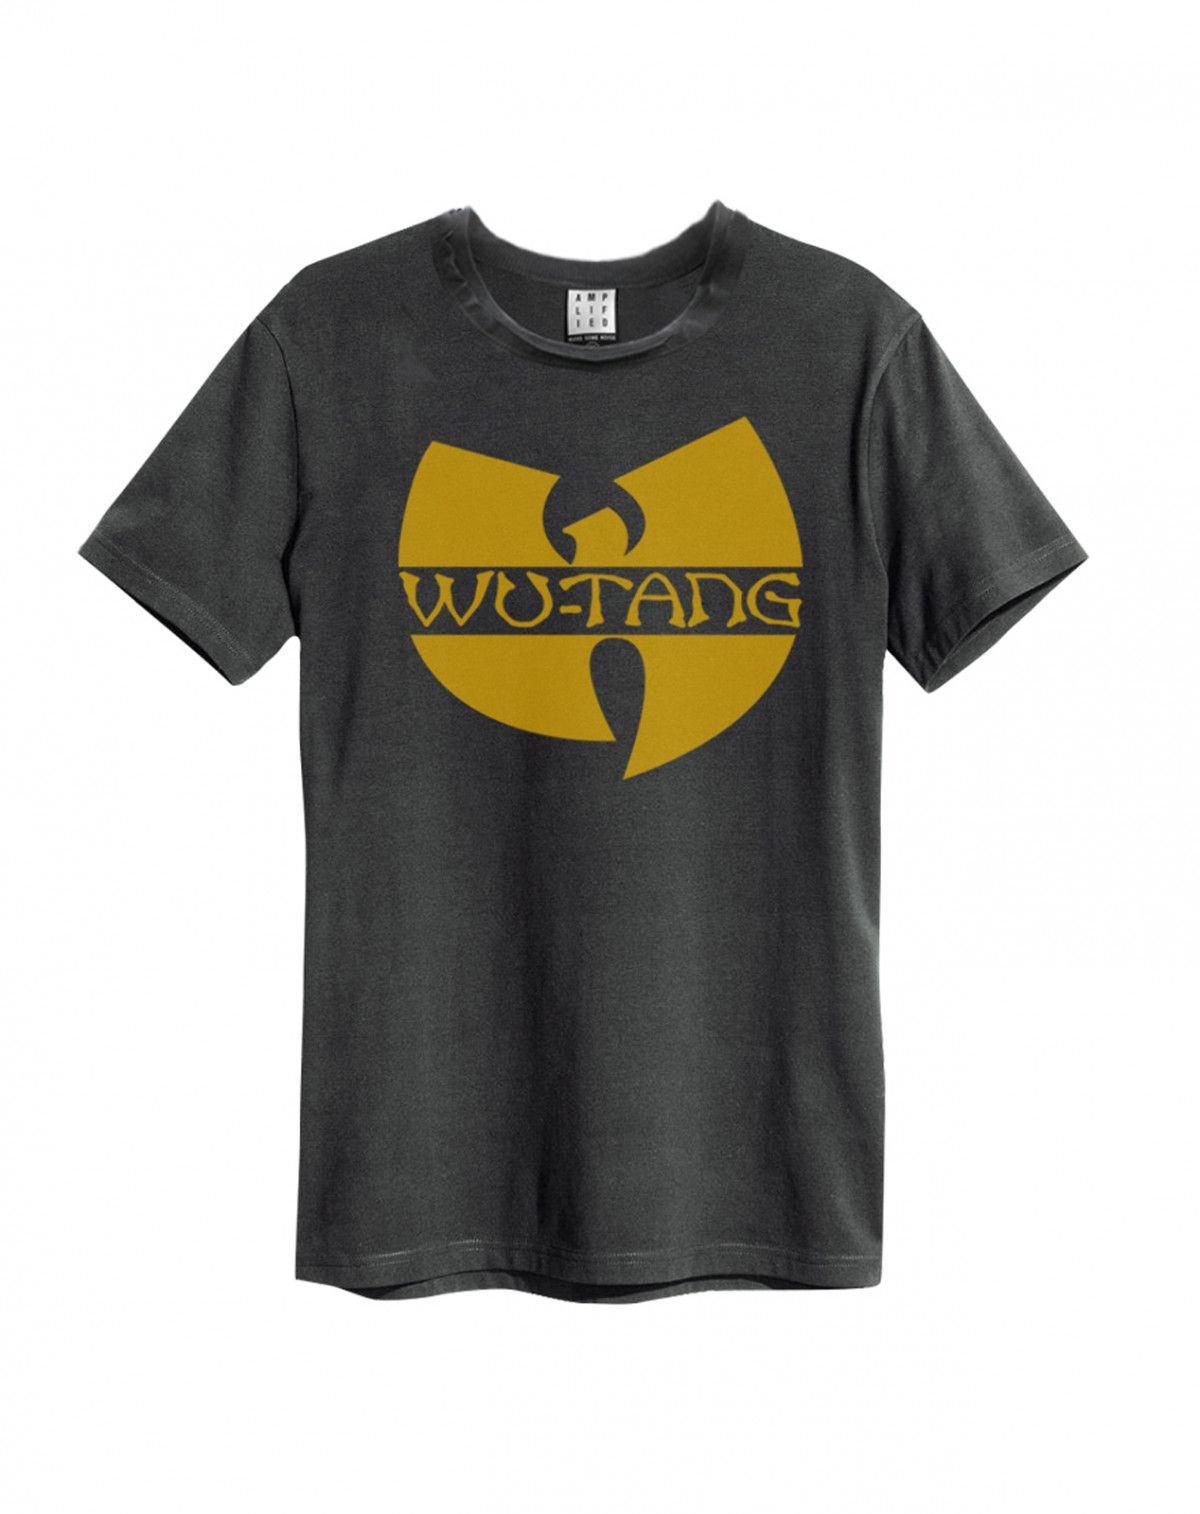 CC Clan Logo - Wu-Tang Clan 'Logo' T-Shirt - Amplified Clothing